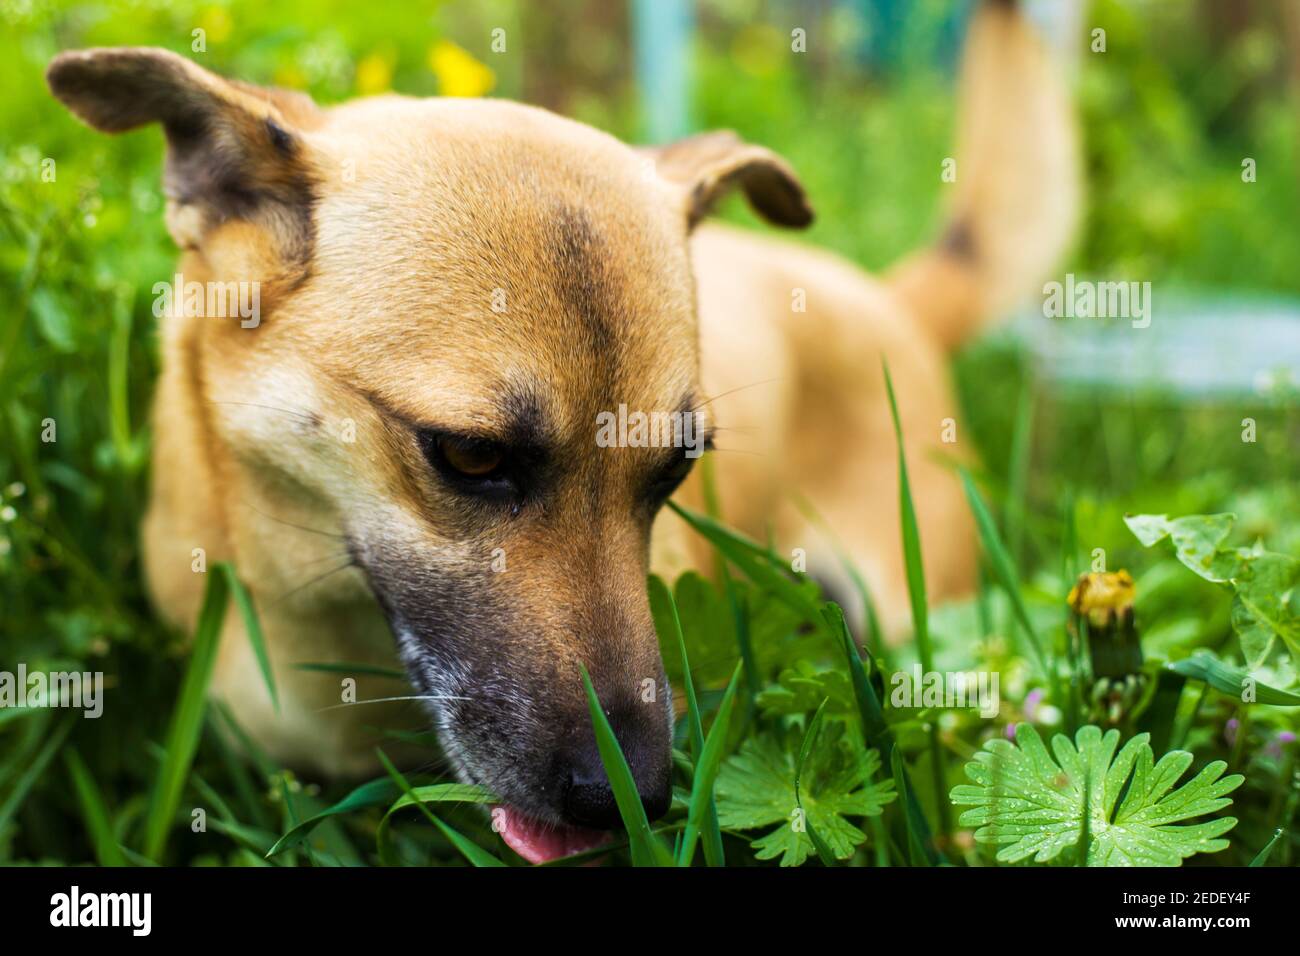 Junger netter Hund isst Gras, Vitaminmangel bei Haustieren Stockfotografie  - Alamy